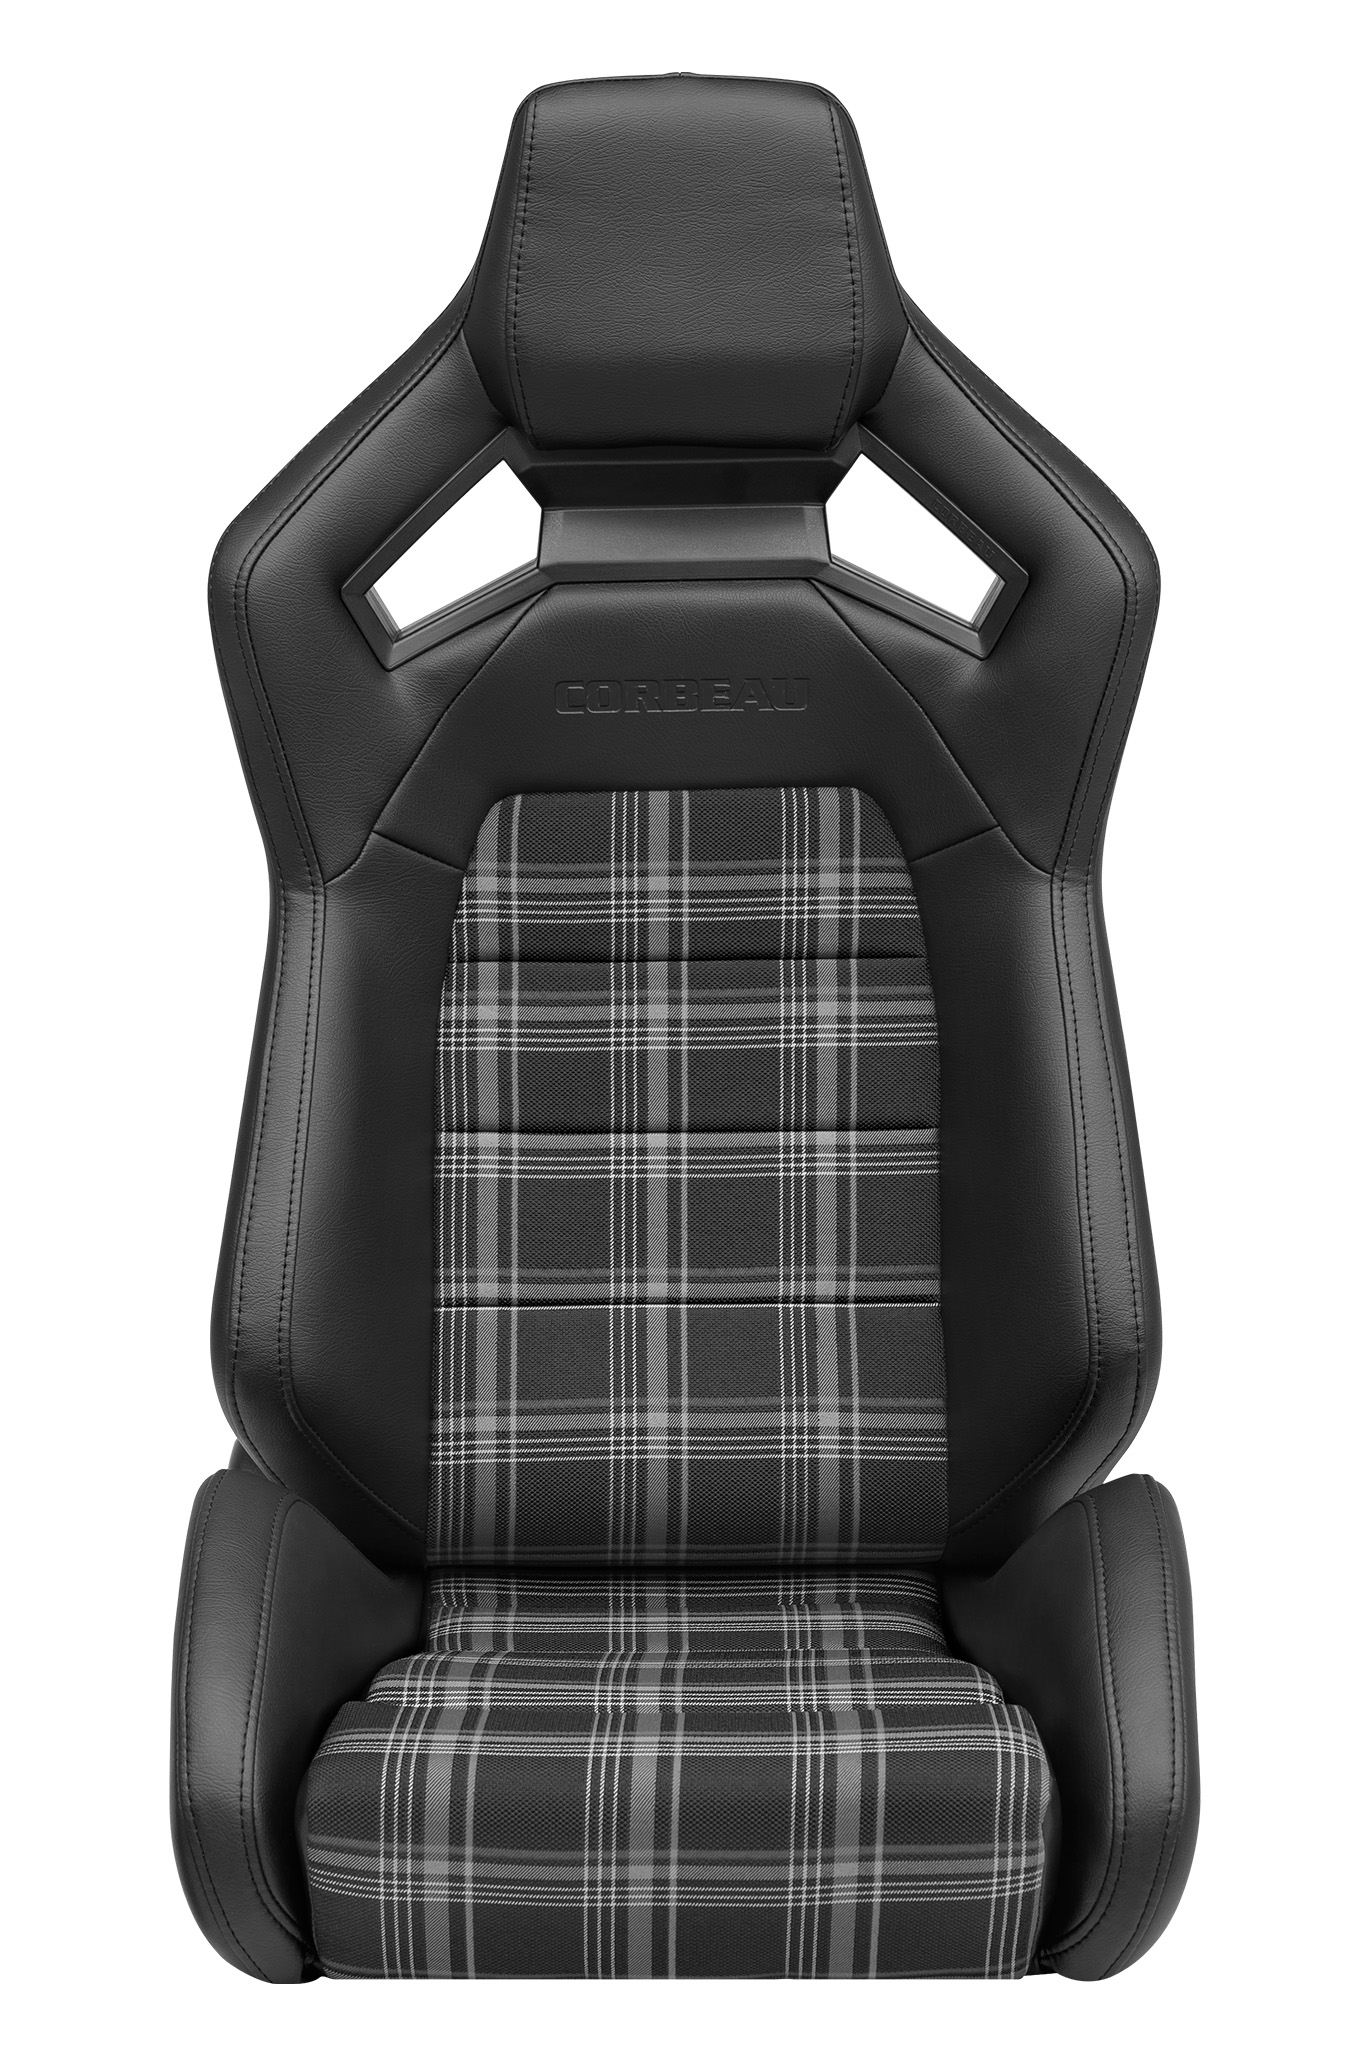 Corbeau Sportline  Racing Seat, RRX Black Vinyl, White Plaid Cloth, 55013PR, PAIR